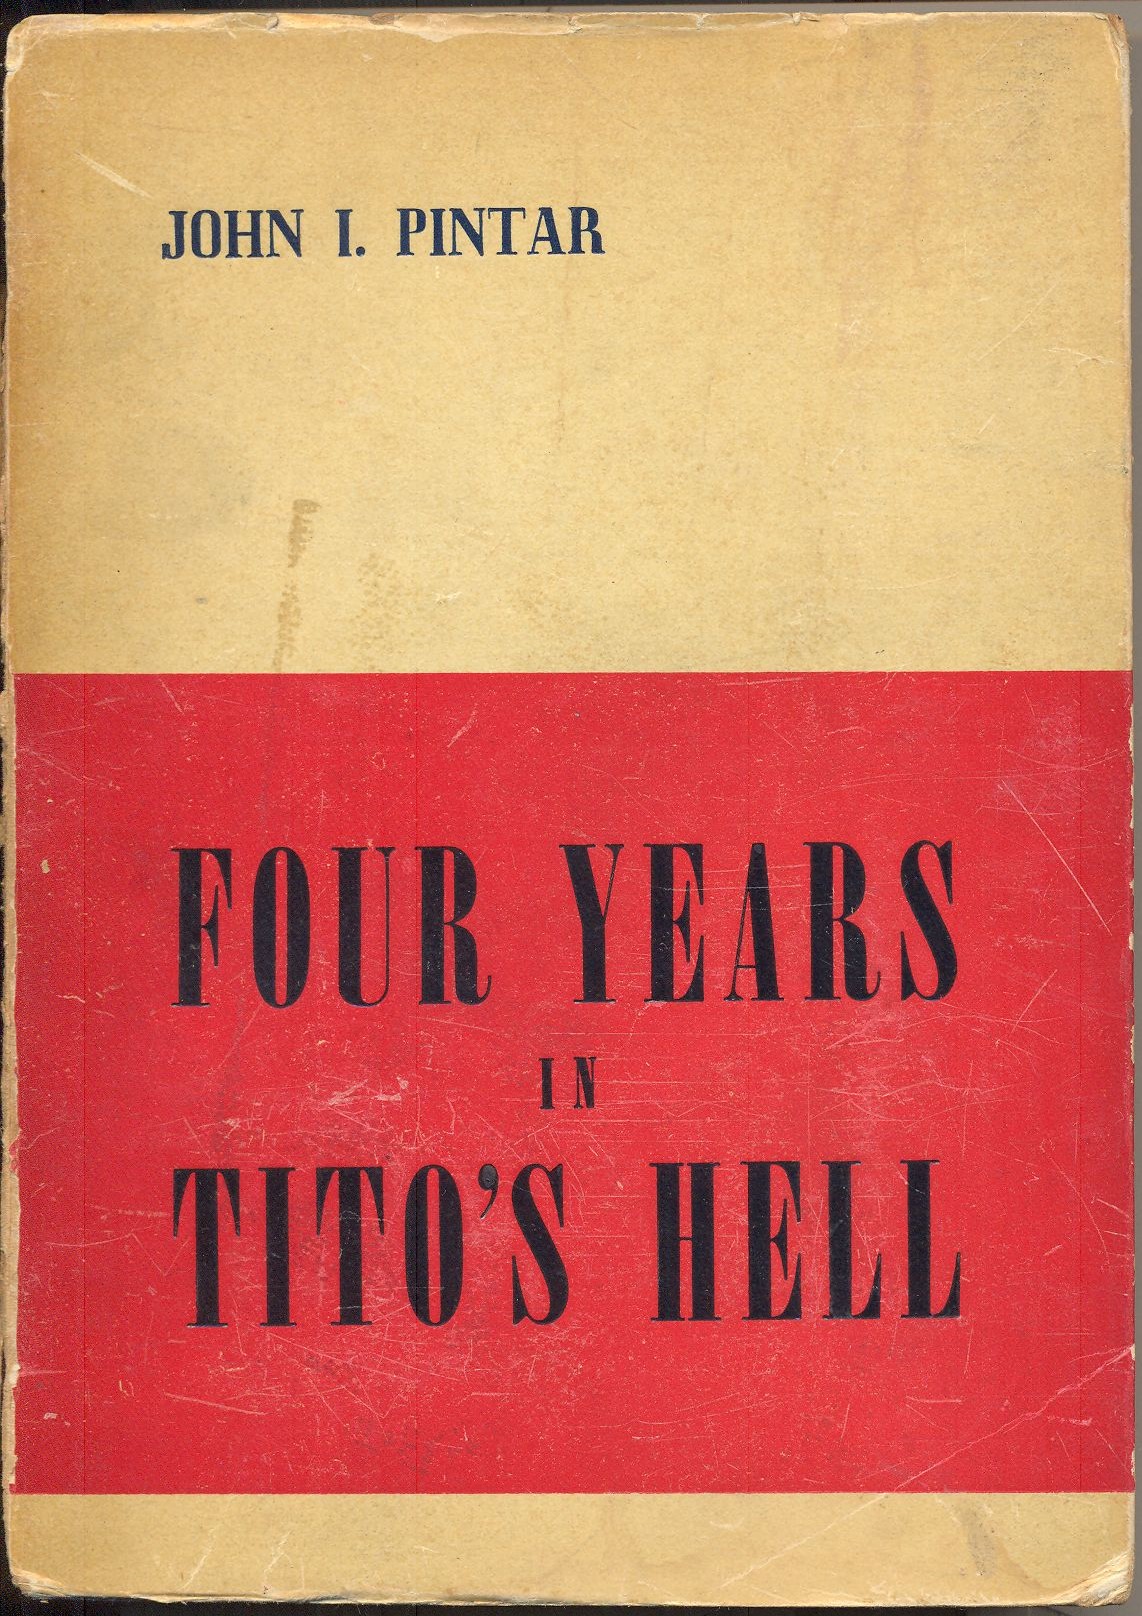 John Pintar. Four years in Tito’s hell, 1954. Naslovnica knjige